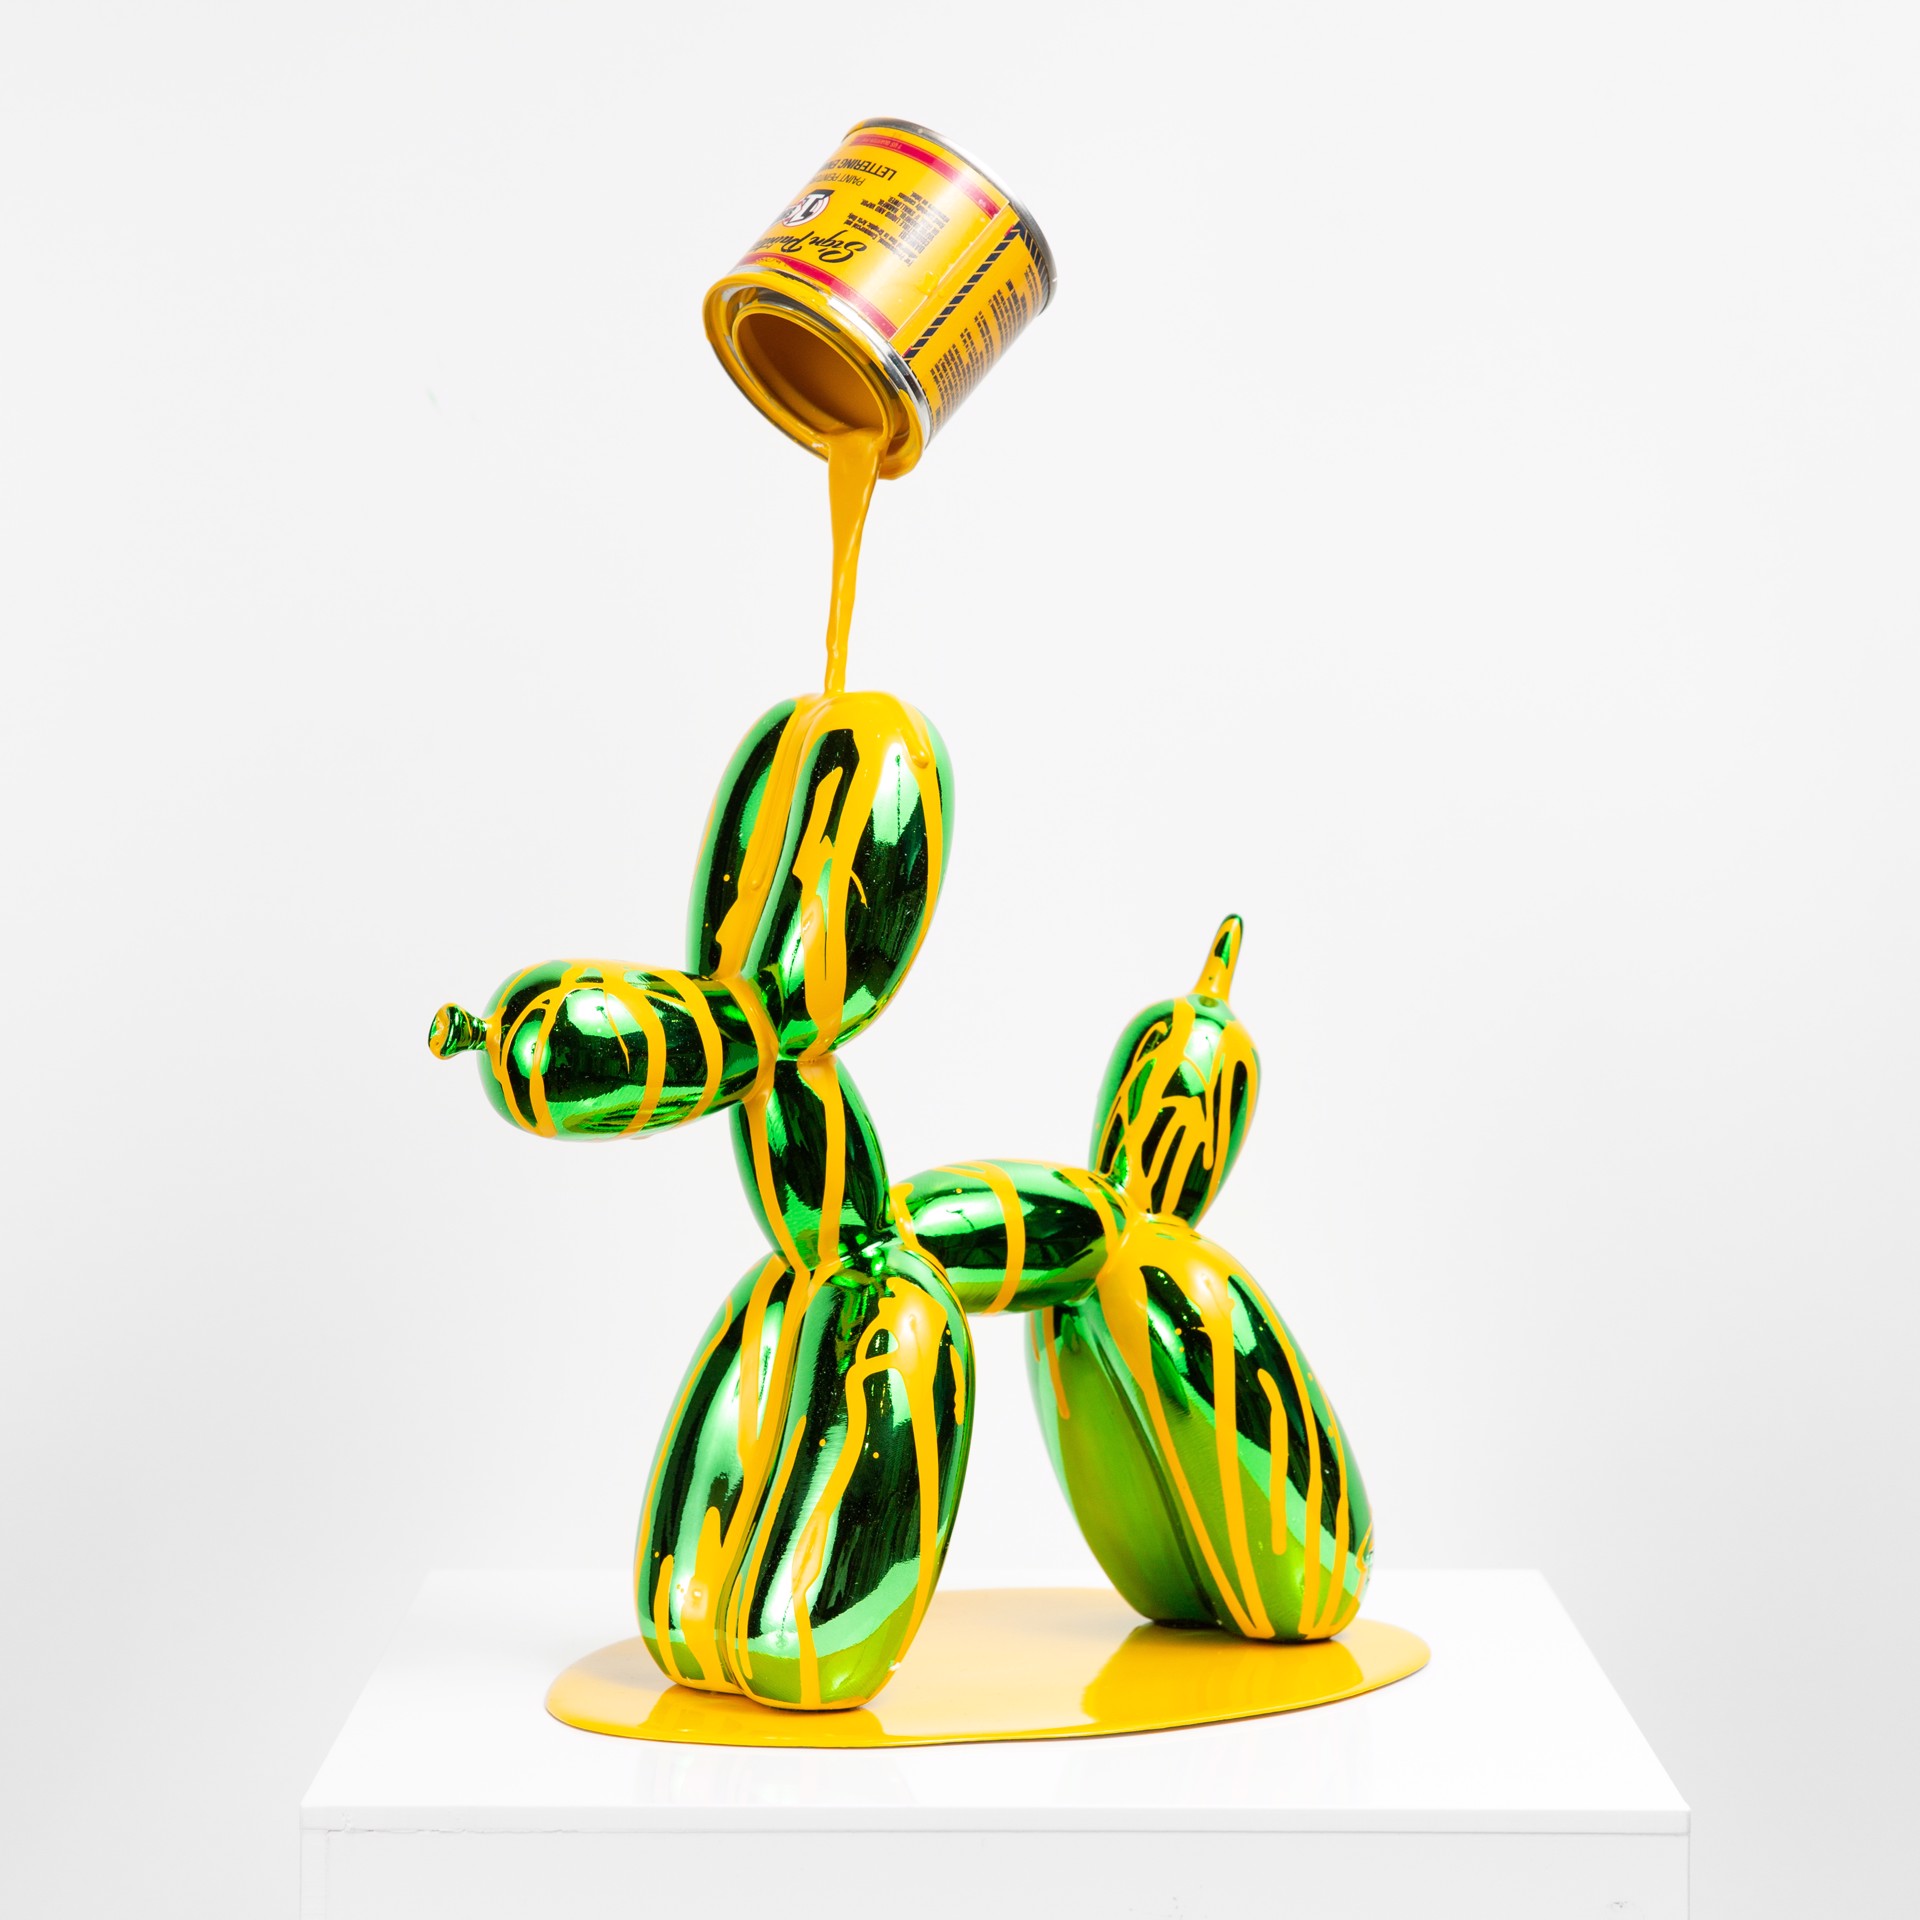 Balloon Dog - Green and yellow by Joe Suzuki